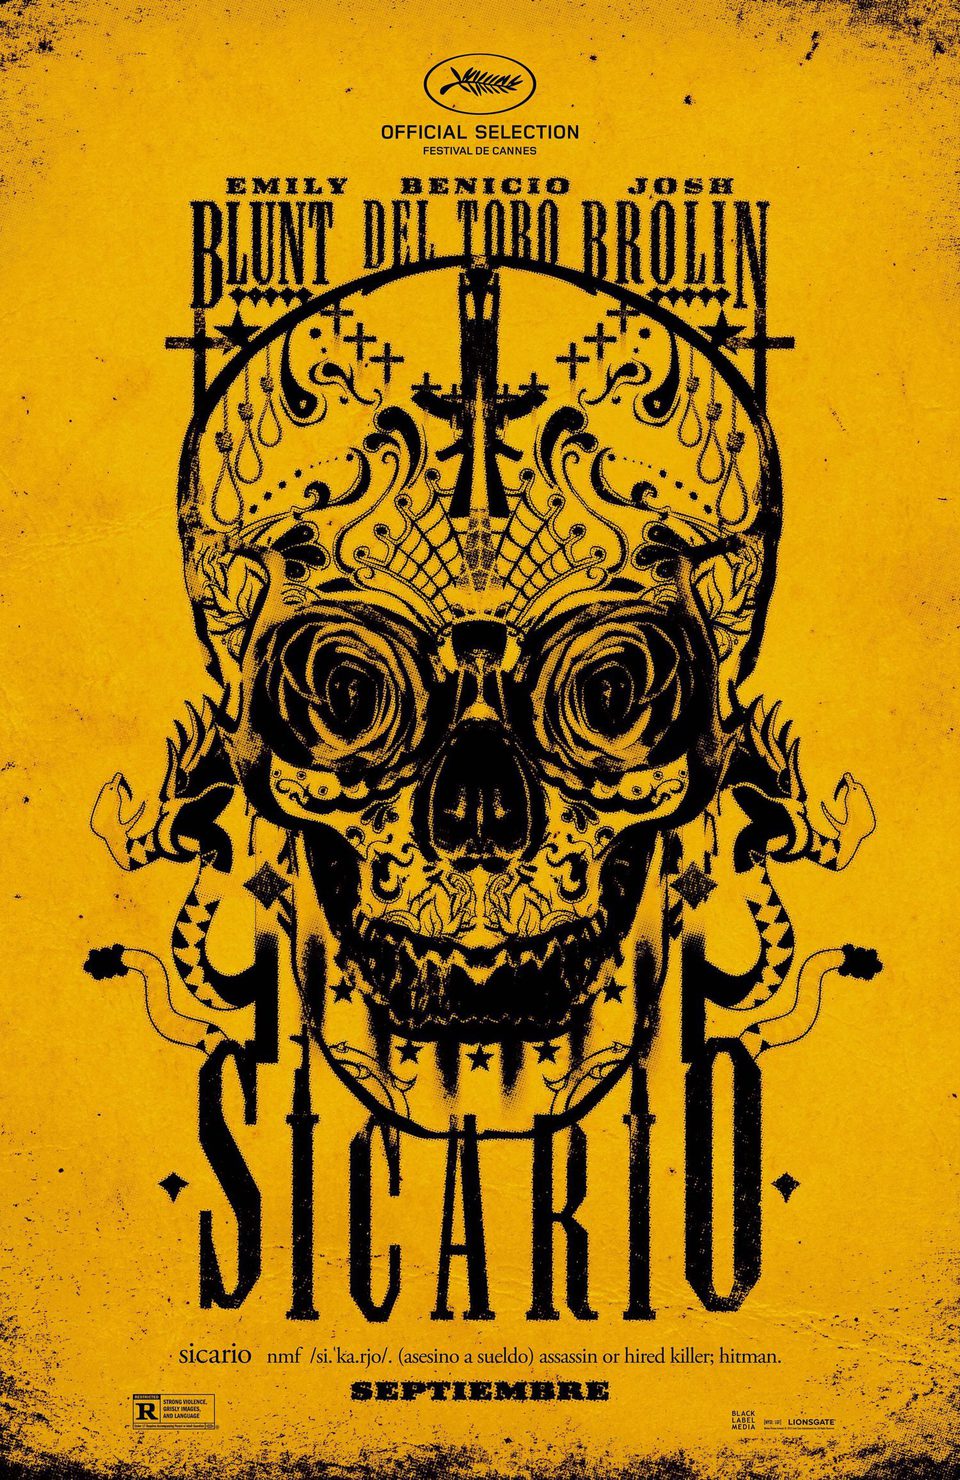 Poster of Sicario - Estados Unidos